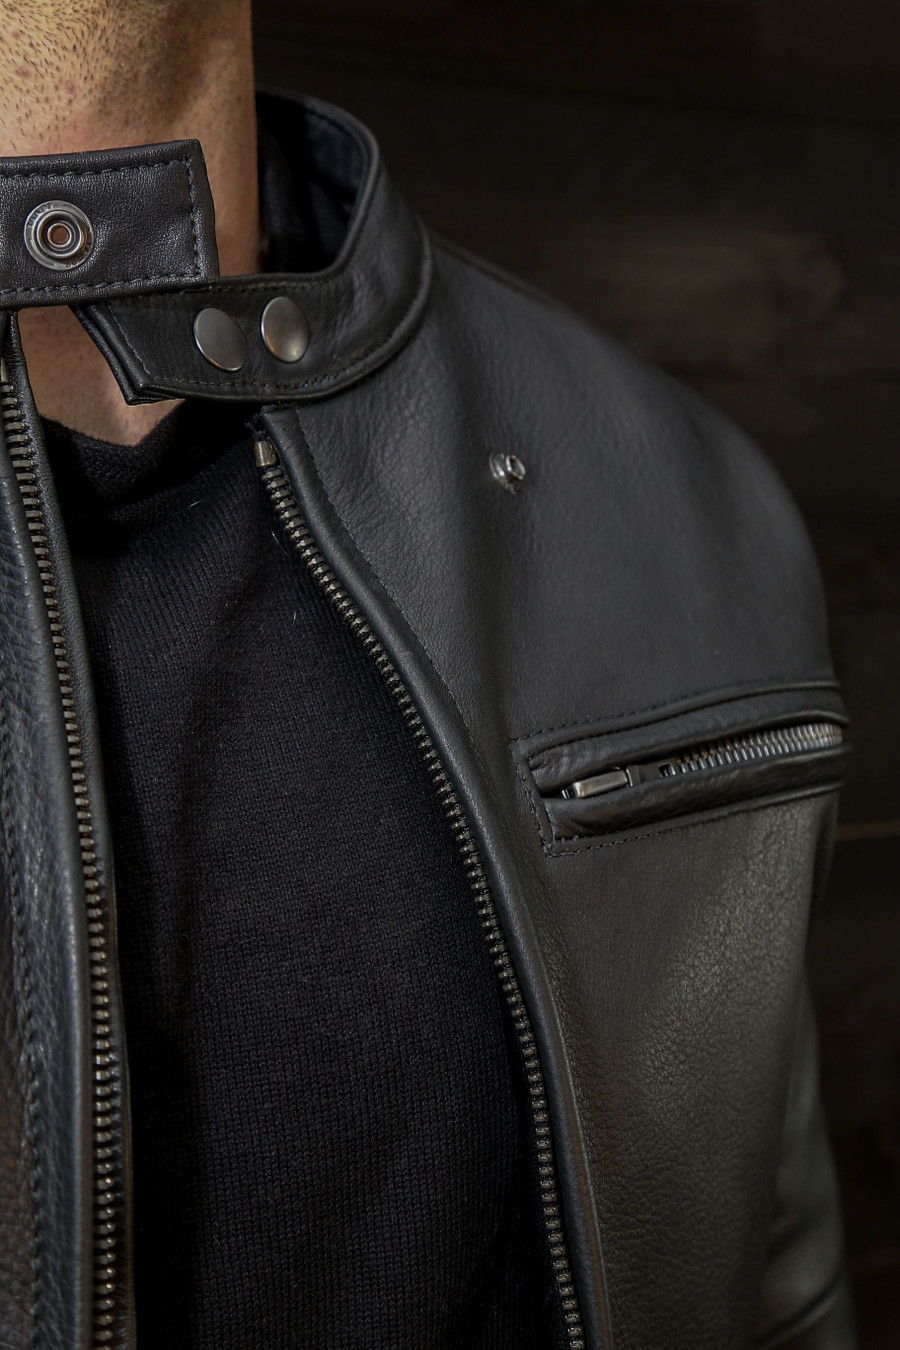 The Pilot Racer motorcycle jacket in black leather - VKTRE Moto Co.